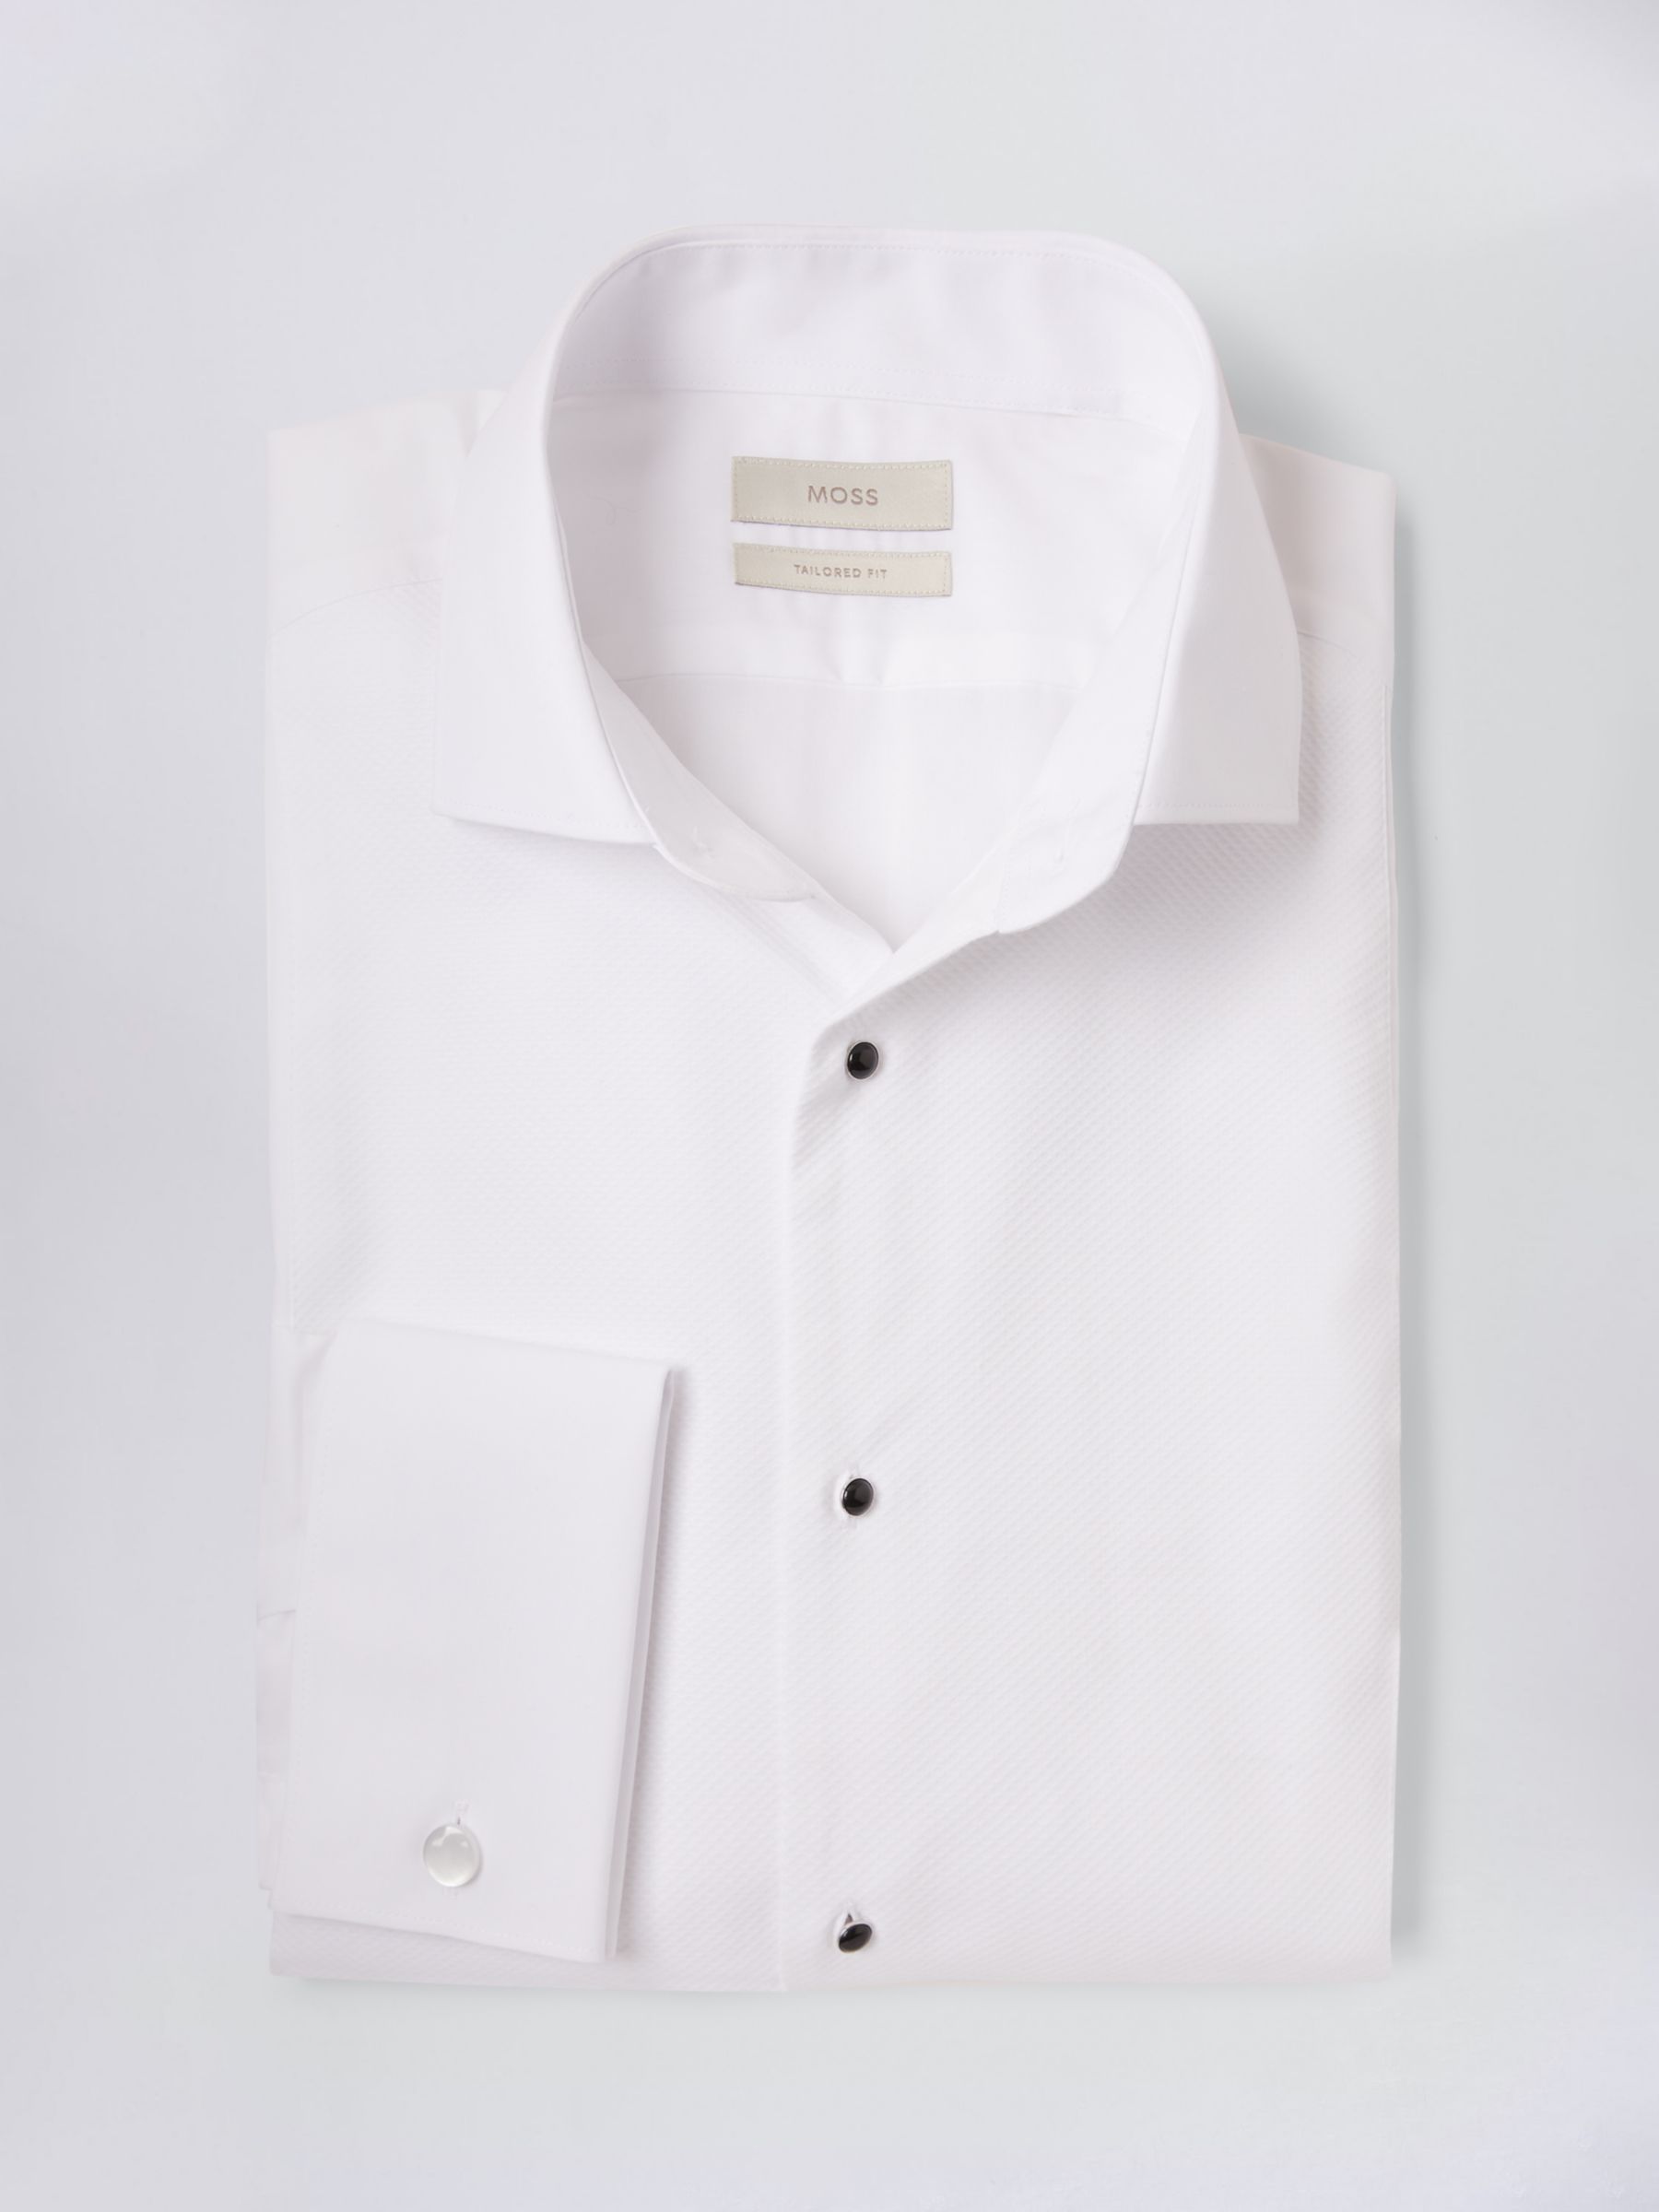 Moss Marcella Classic Collar Dress Shirt, White, 14